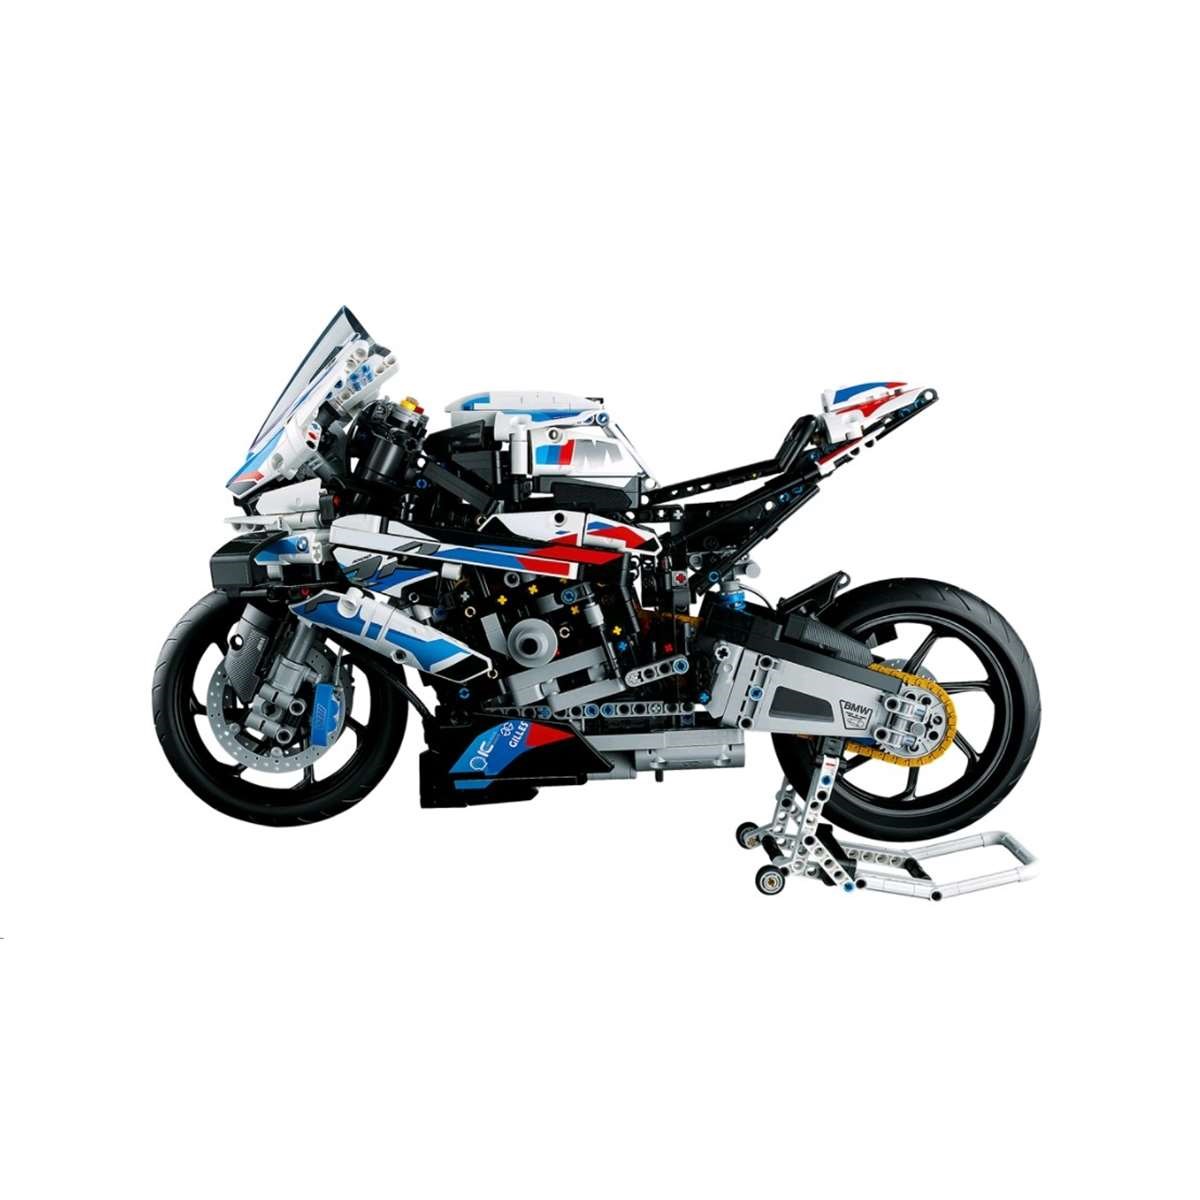 https://bilder.motoshop24.ch/im/BMW-M1000RR-LEGO-Technic-LEG42130-3/0733130_0.jpeg?maxwidth=1200&maxheight=1200